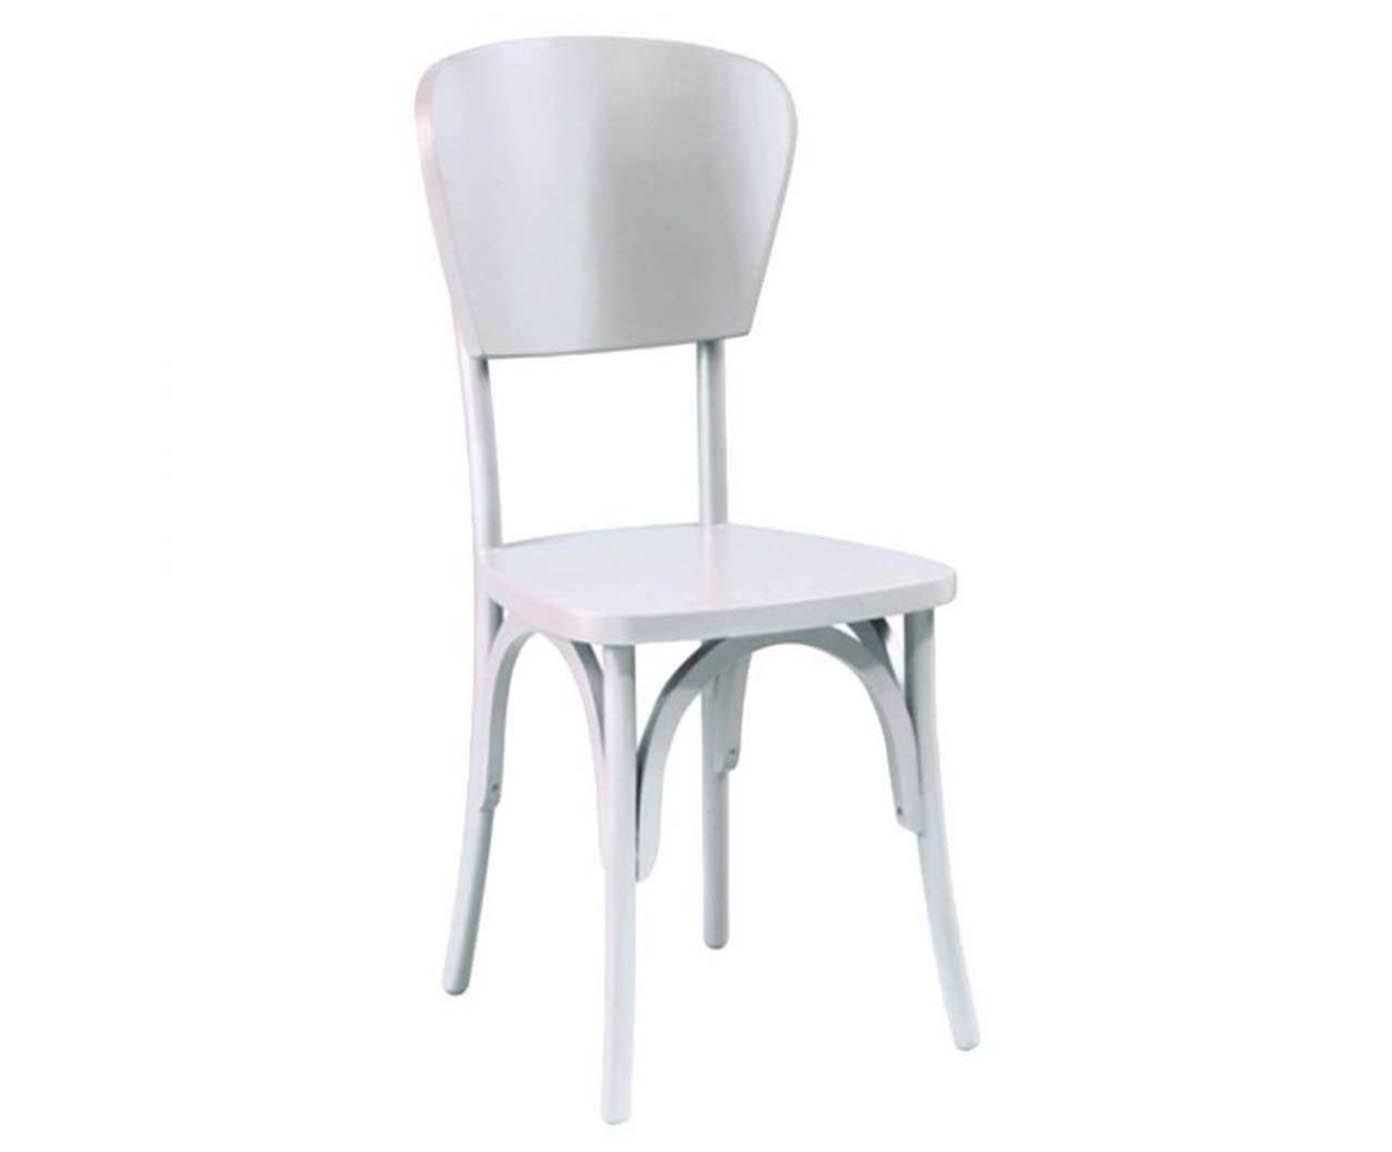 Cadeira romarin plank - union | Westwing.com.br